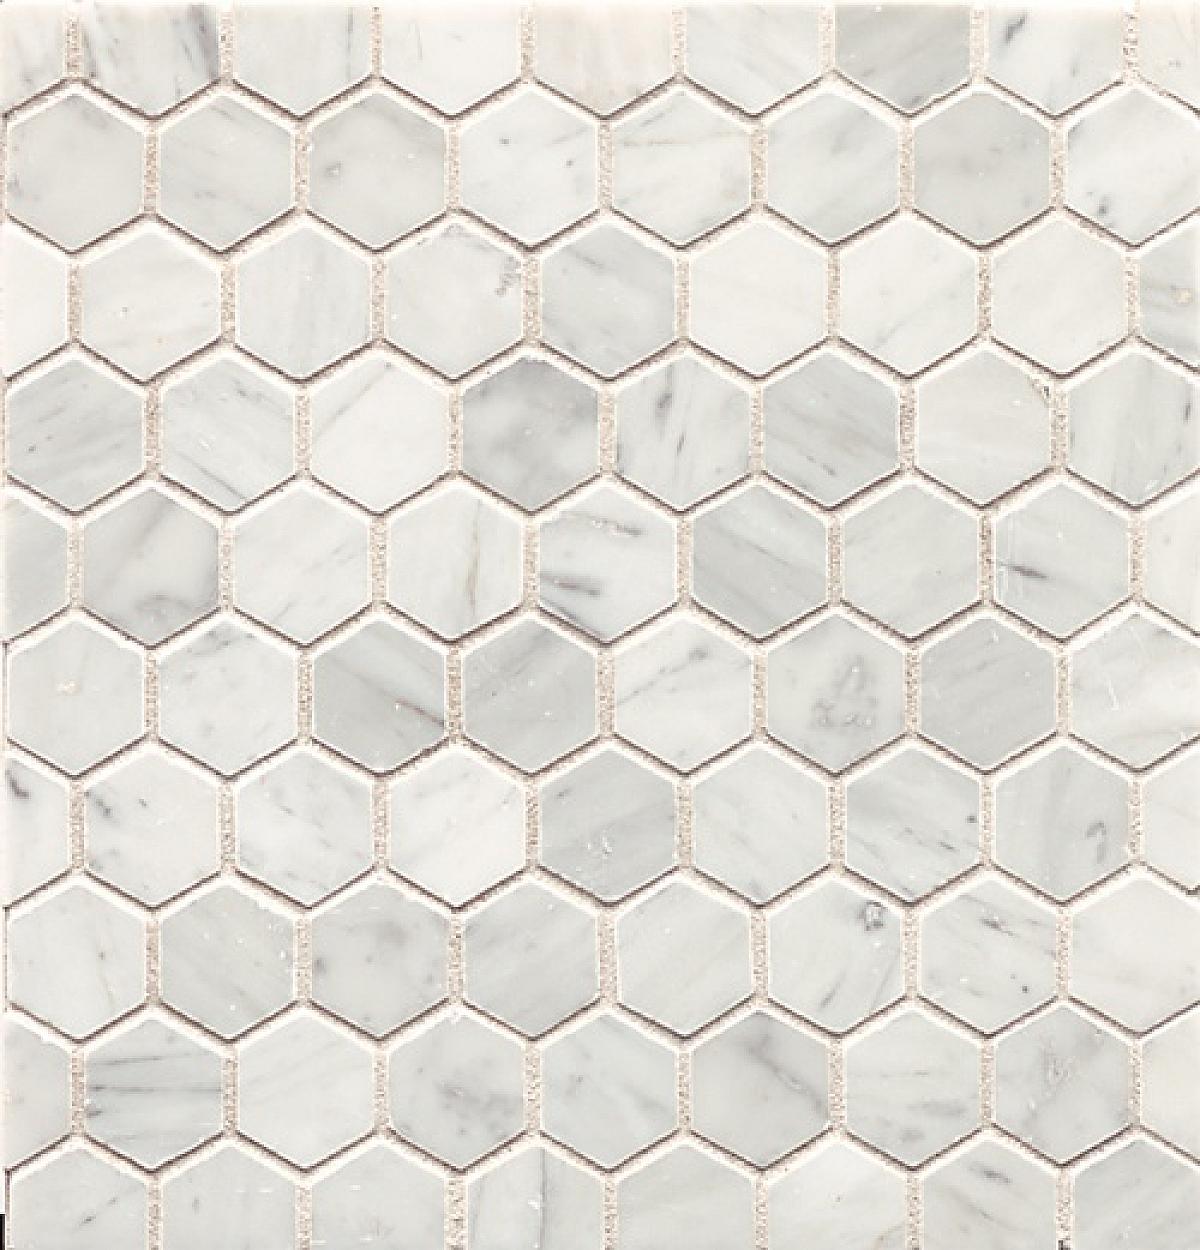 Mod Rocks 1" x 1" Hexagon Mosaic Tile